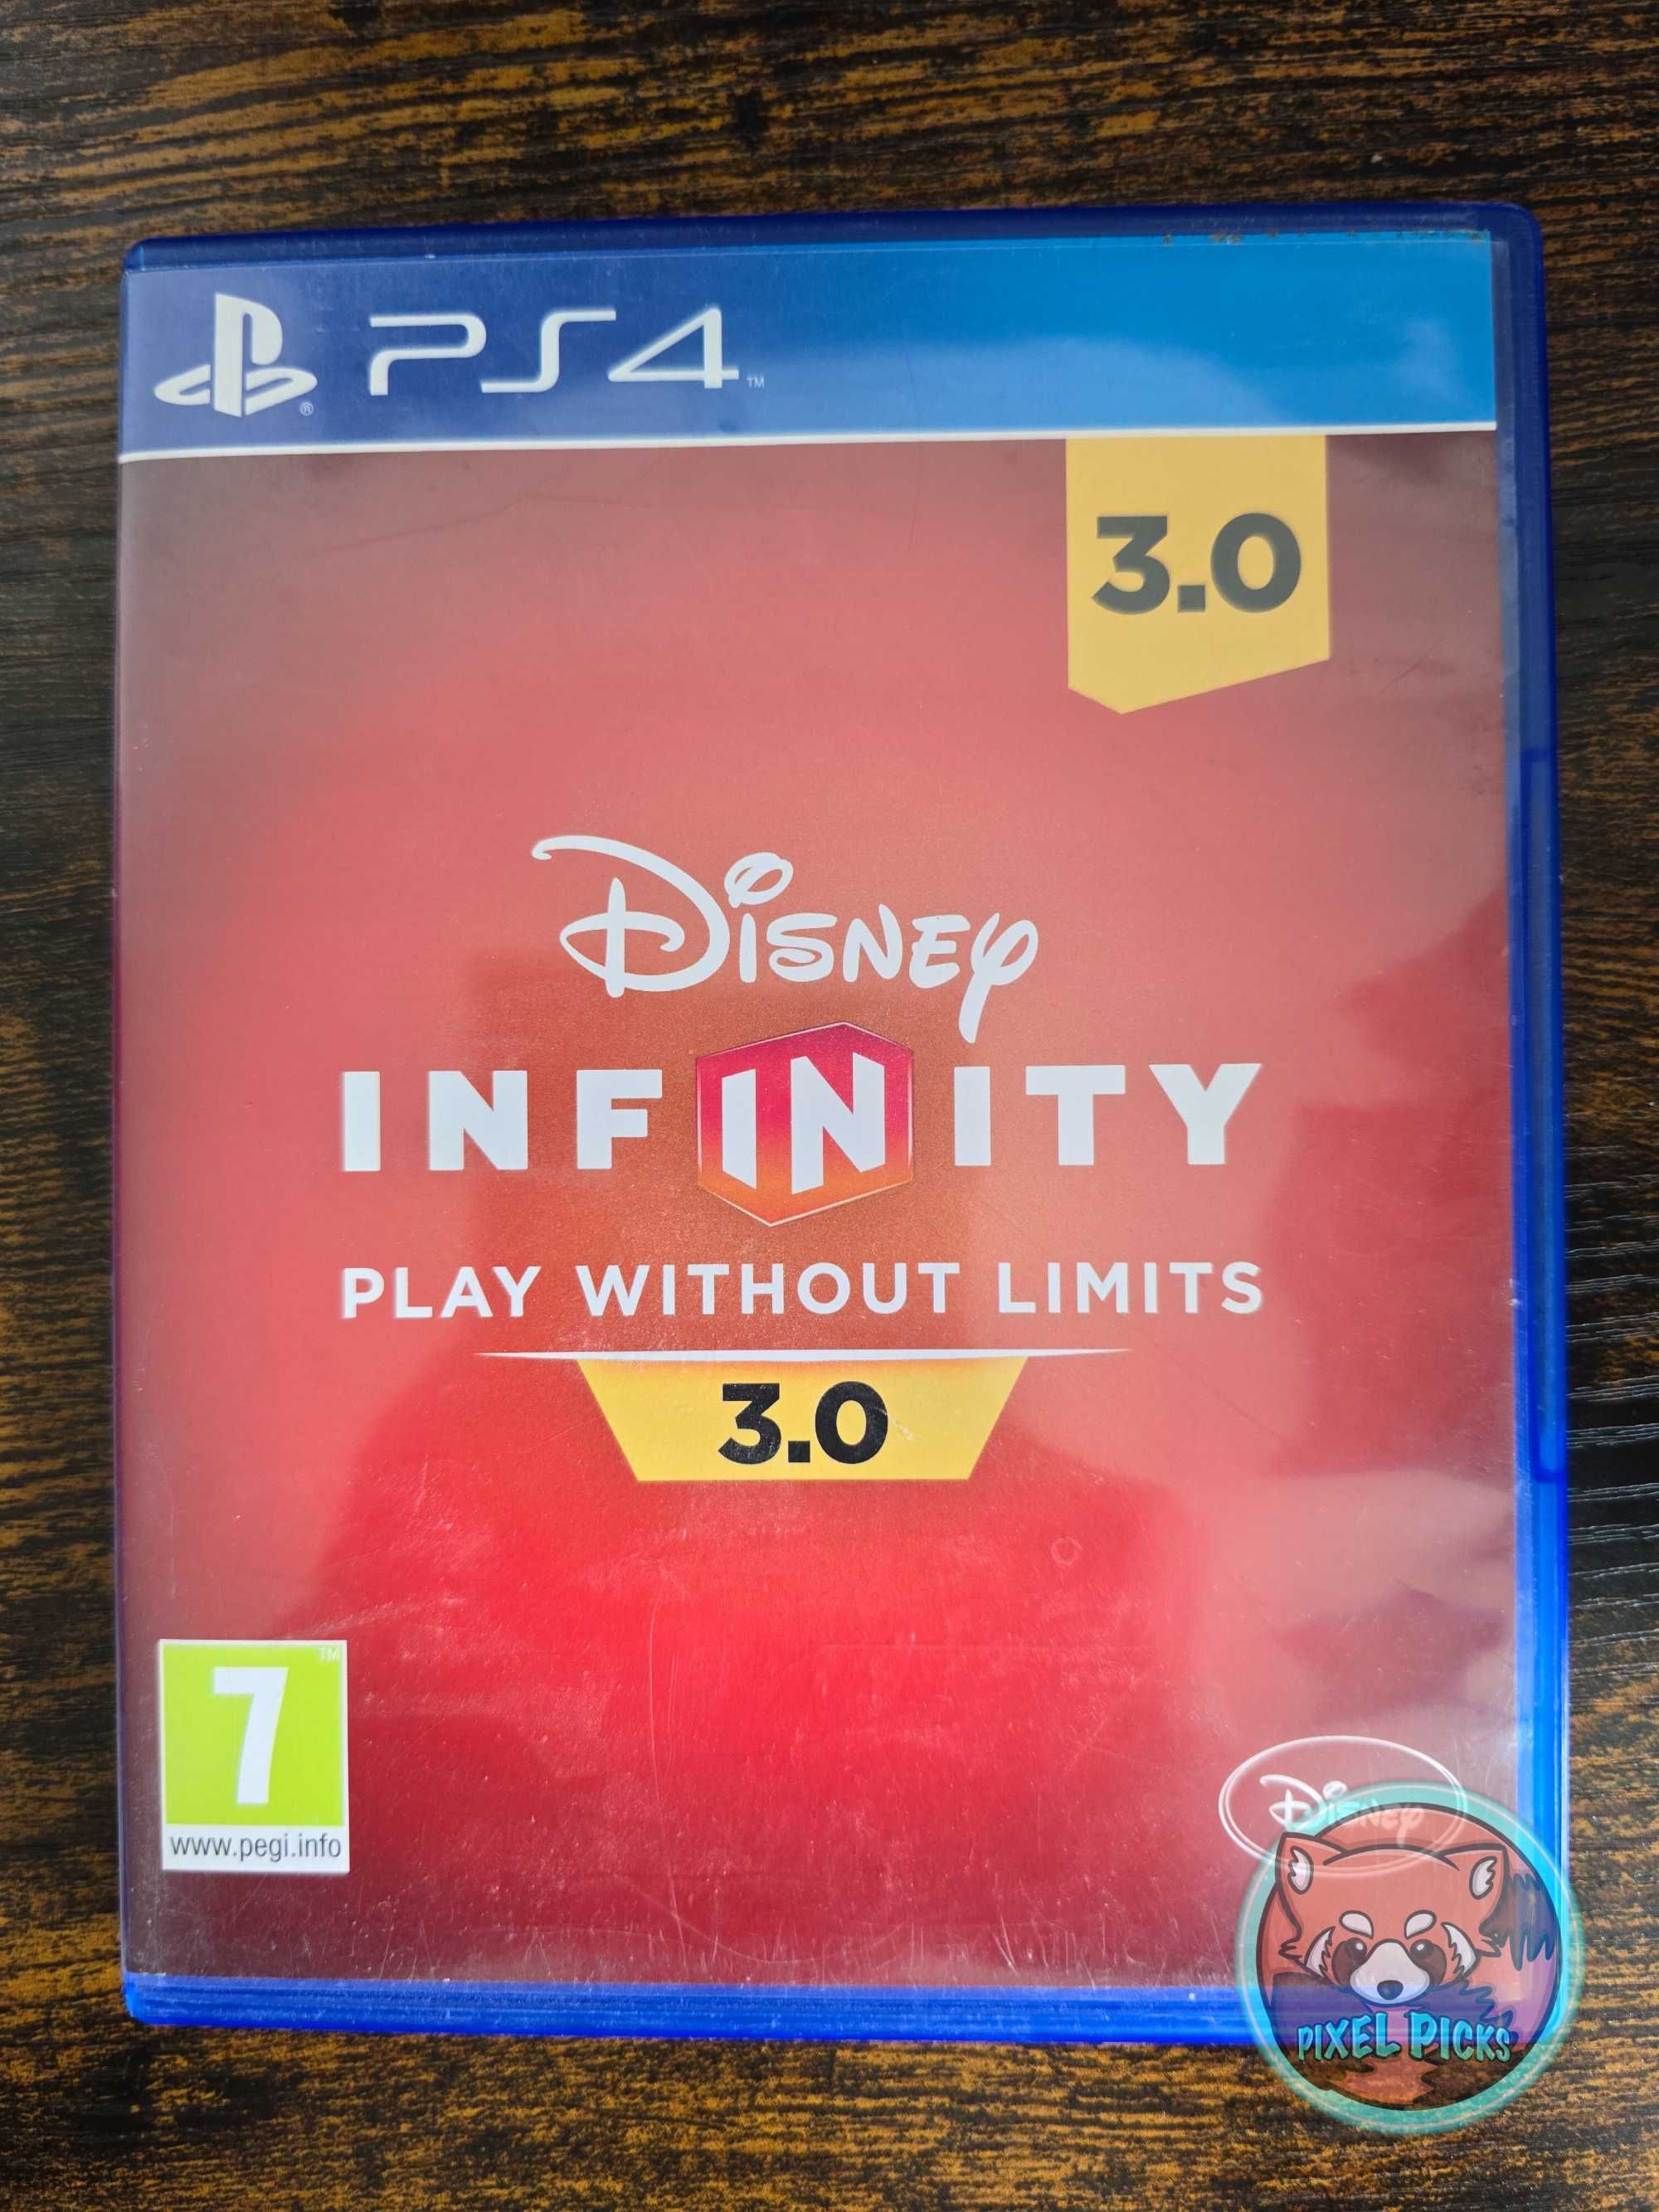 Disney infinity 3.0 ps4 playstation 4